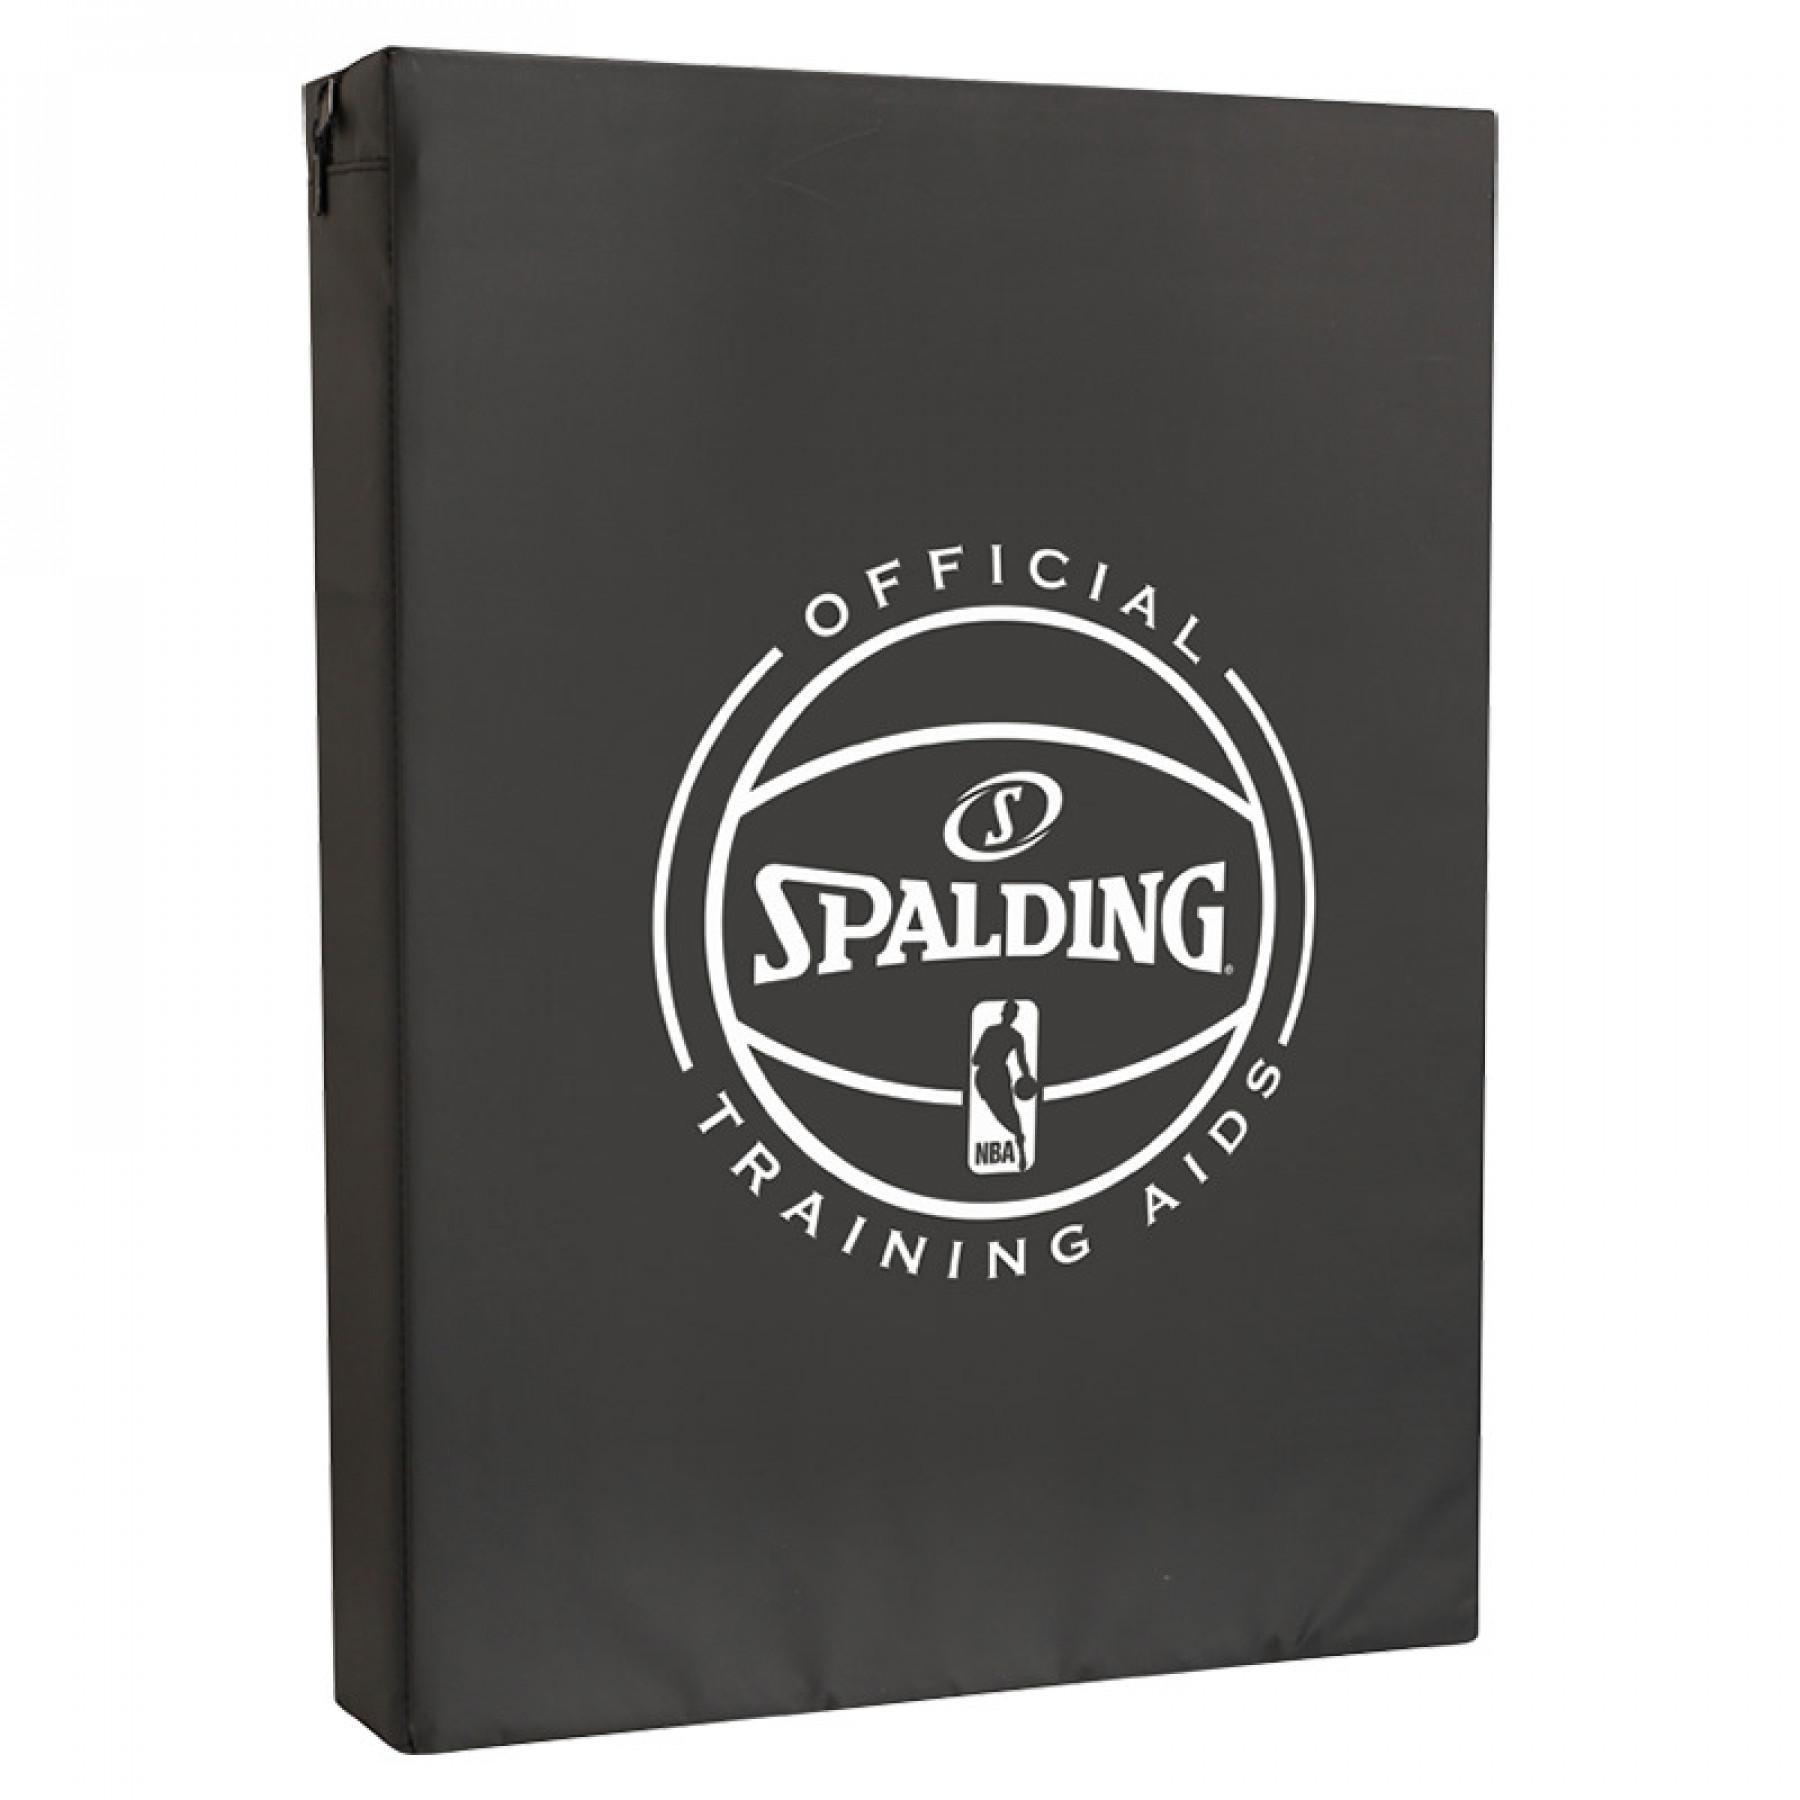 Board Spalding Blocking (8483cn)